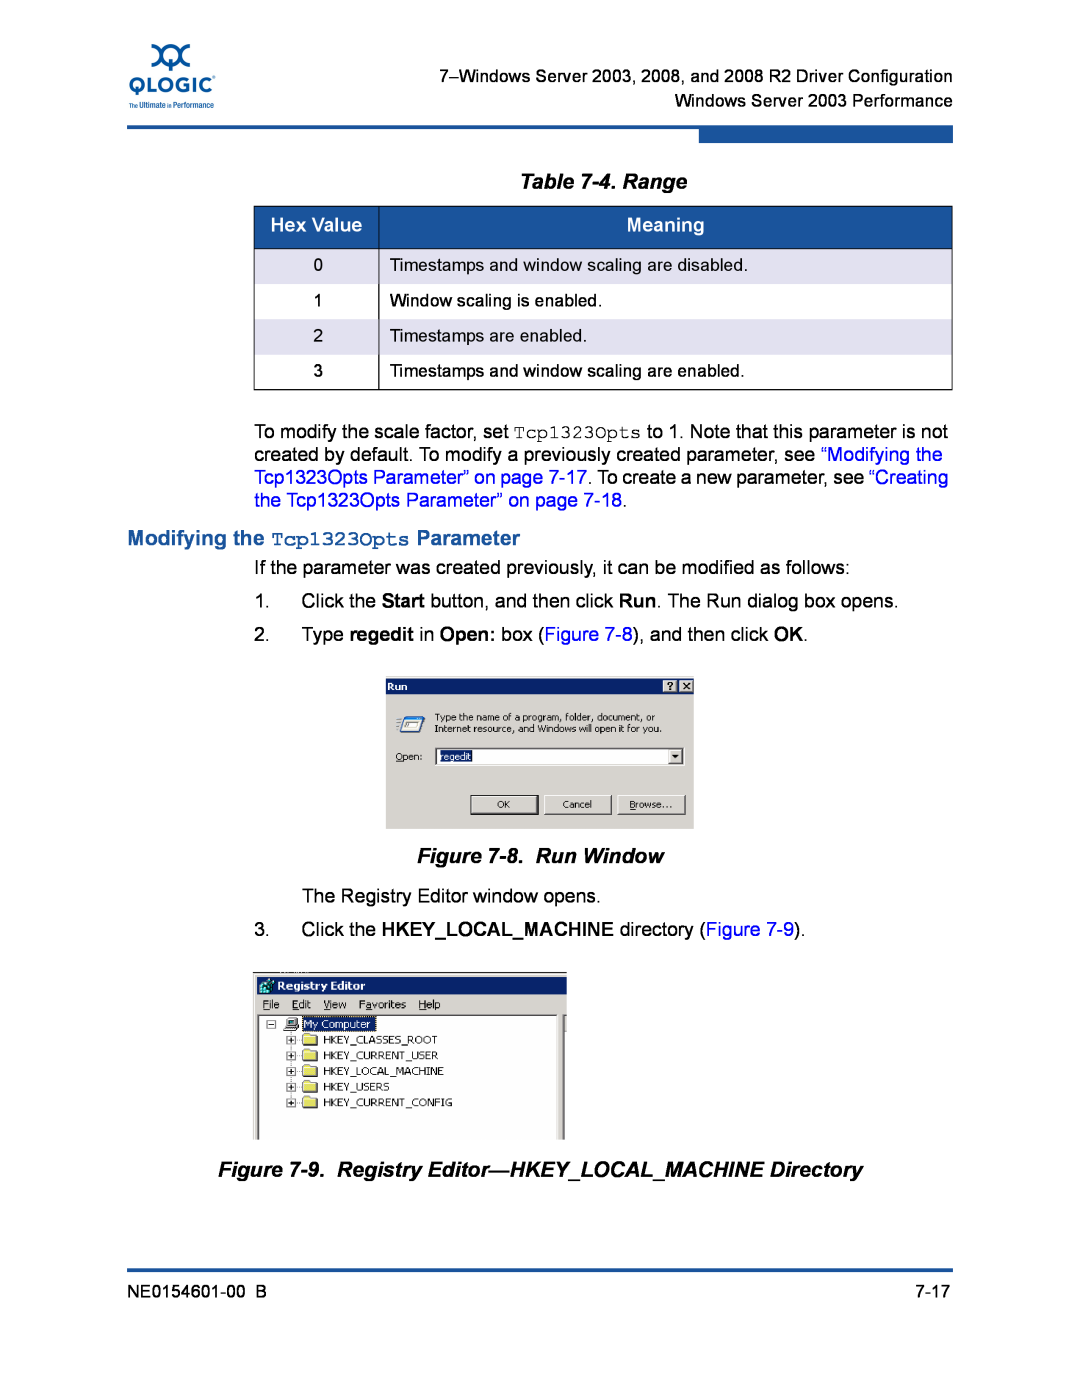 Q-Logic 3000 4. Range, Modifying the Tcp1323Opts Parameter, 8. Run Window, 9. Registry Editor-HKEYLOCALMACHINE Directory 